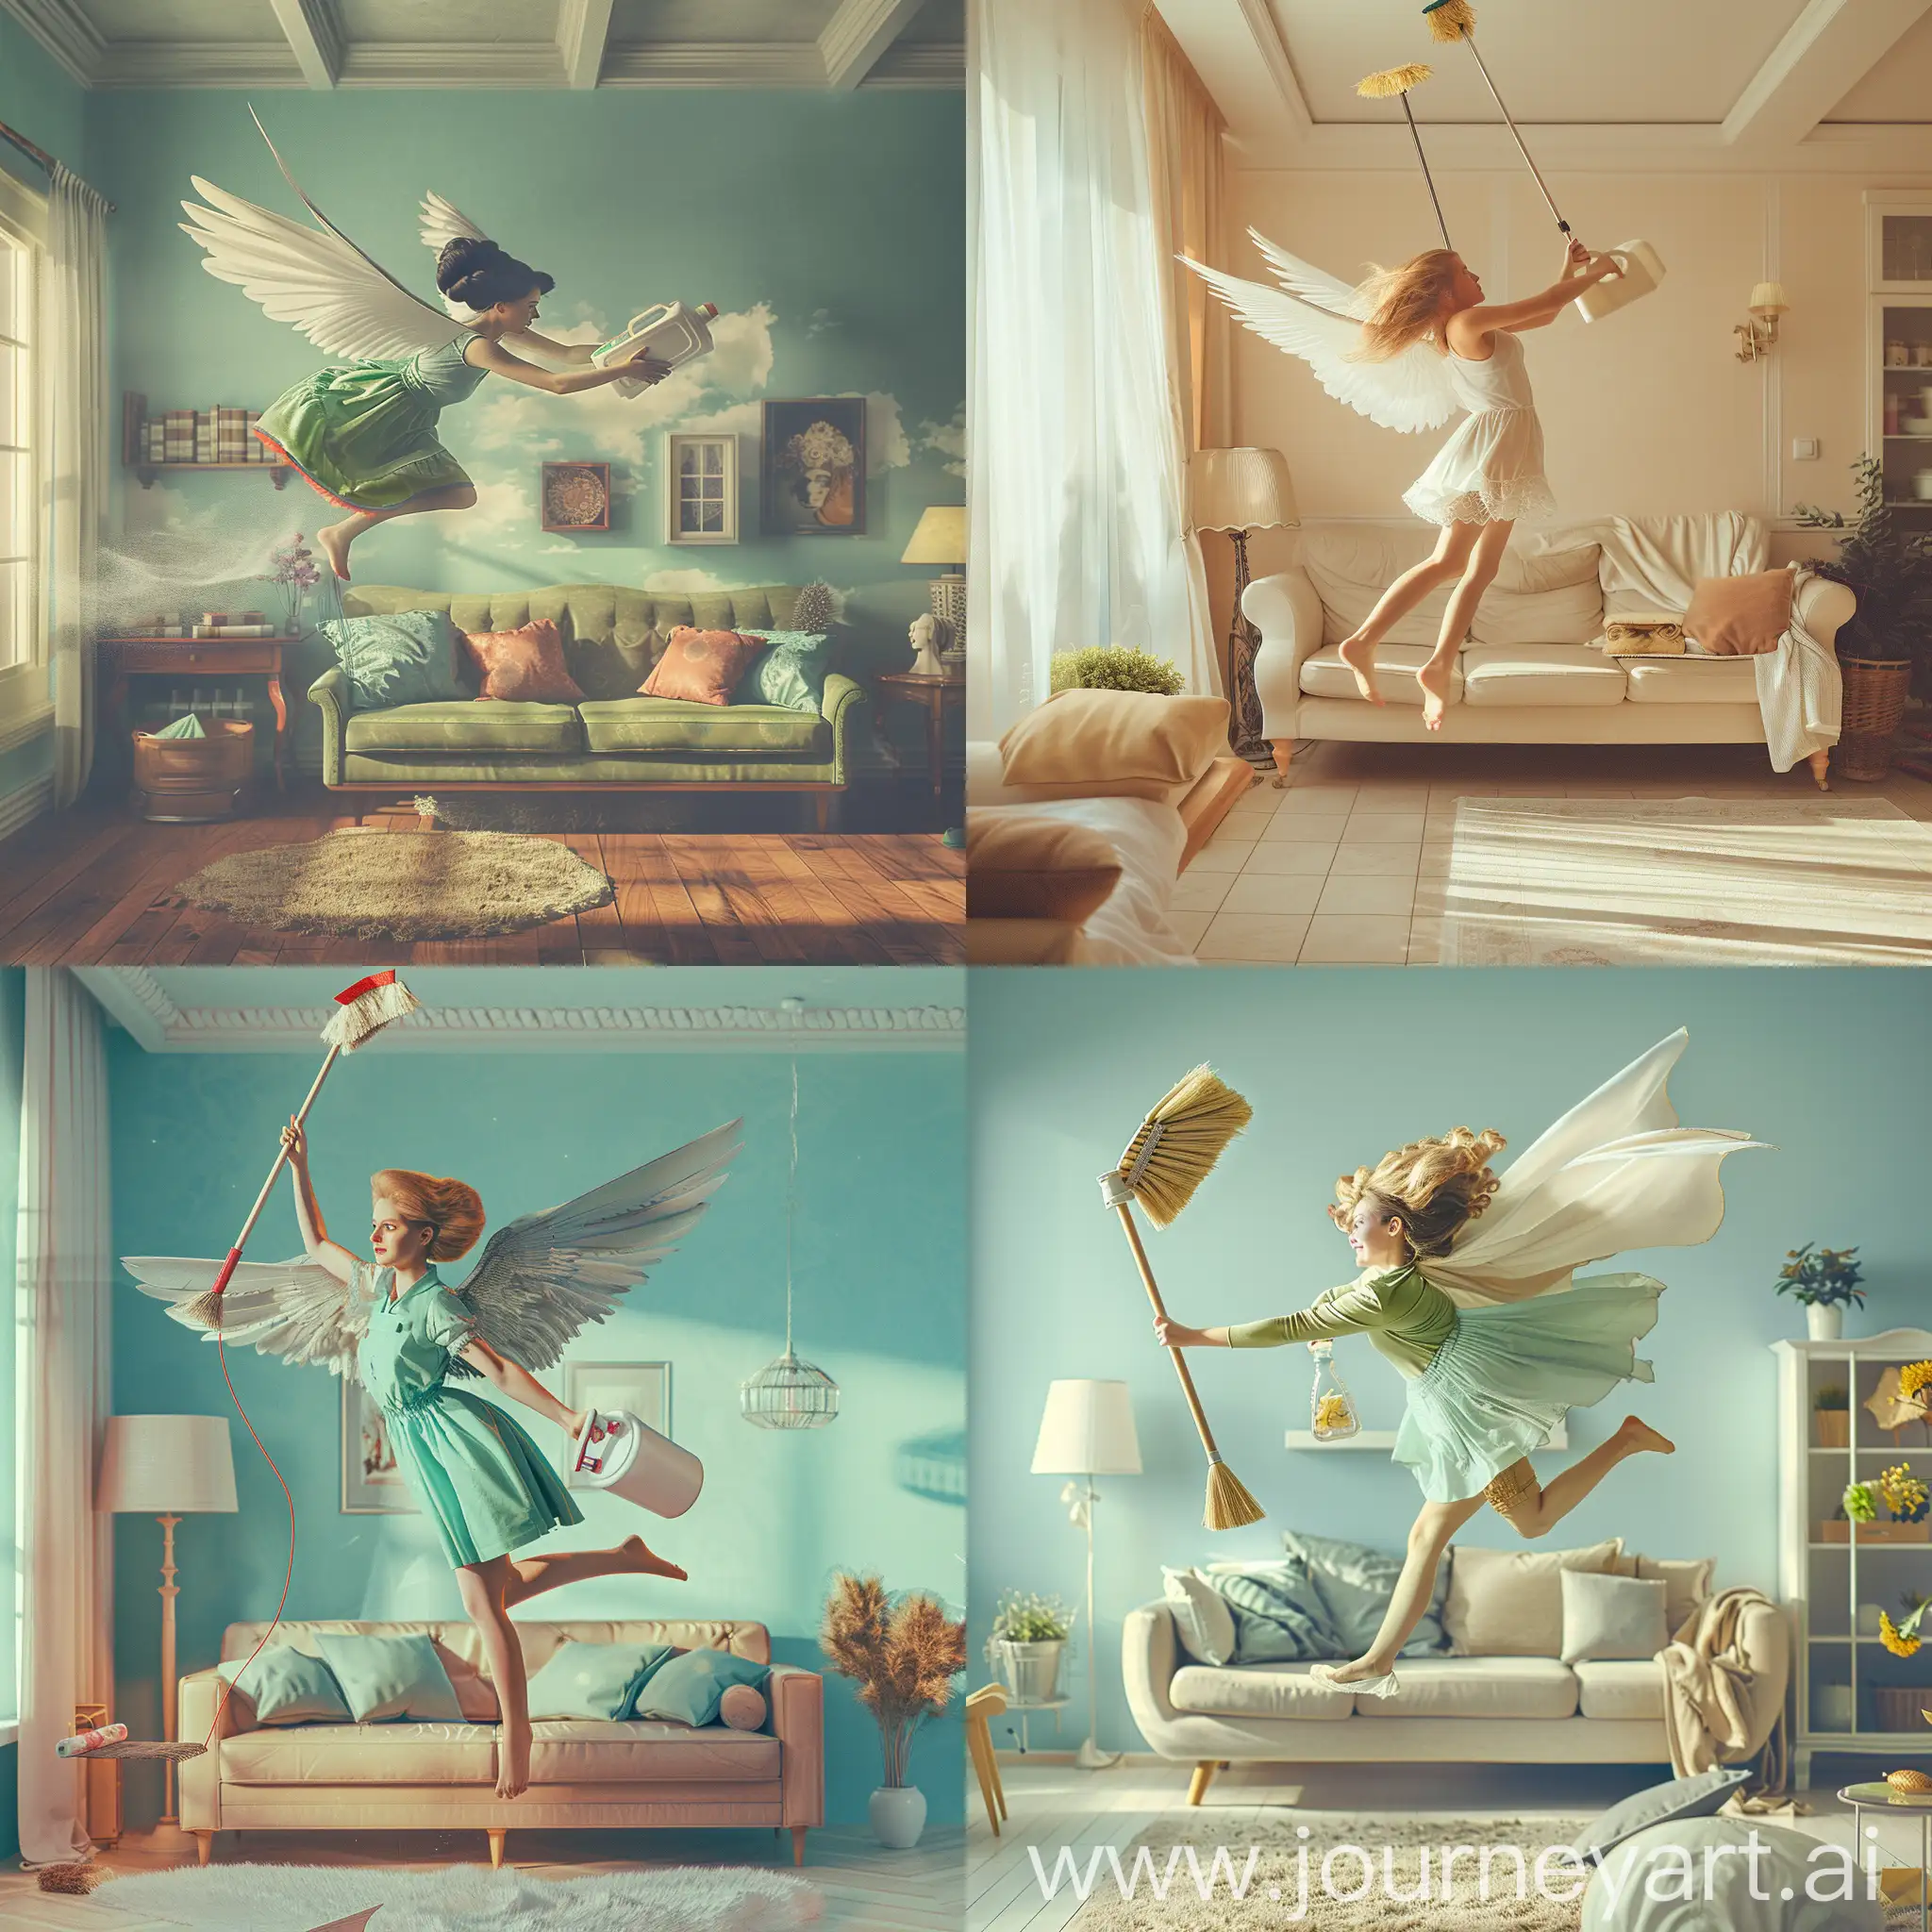 Joyful-Girl-Cleaning-in-Bright-Living-Room